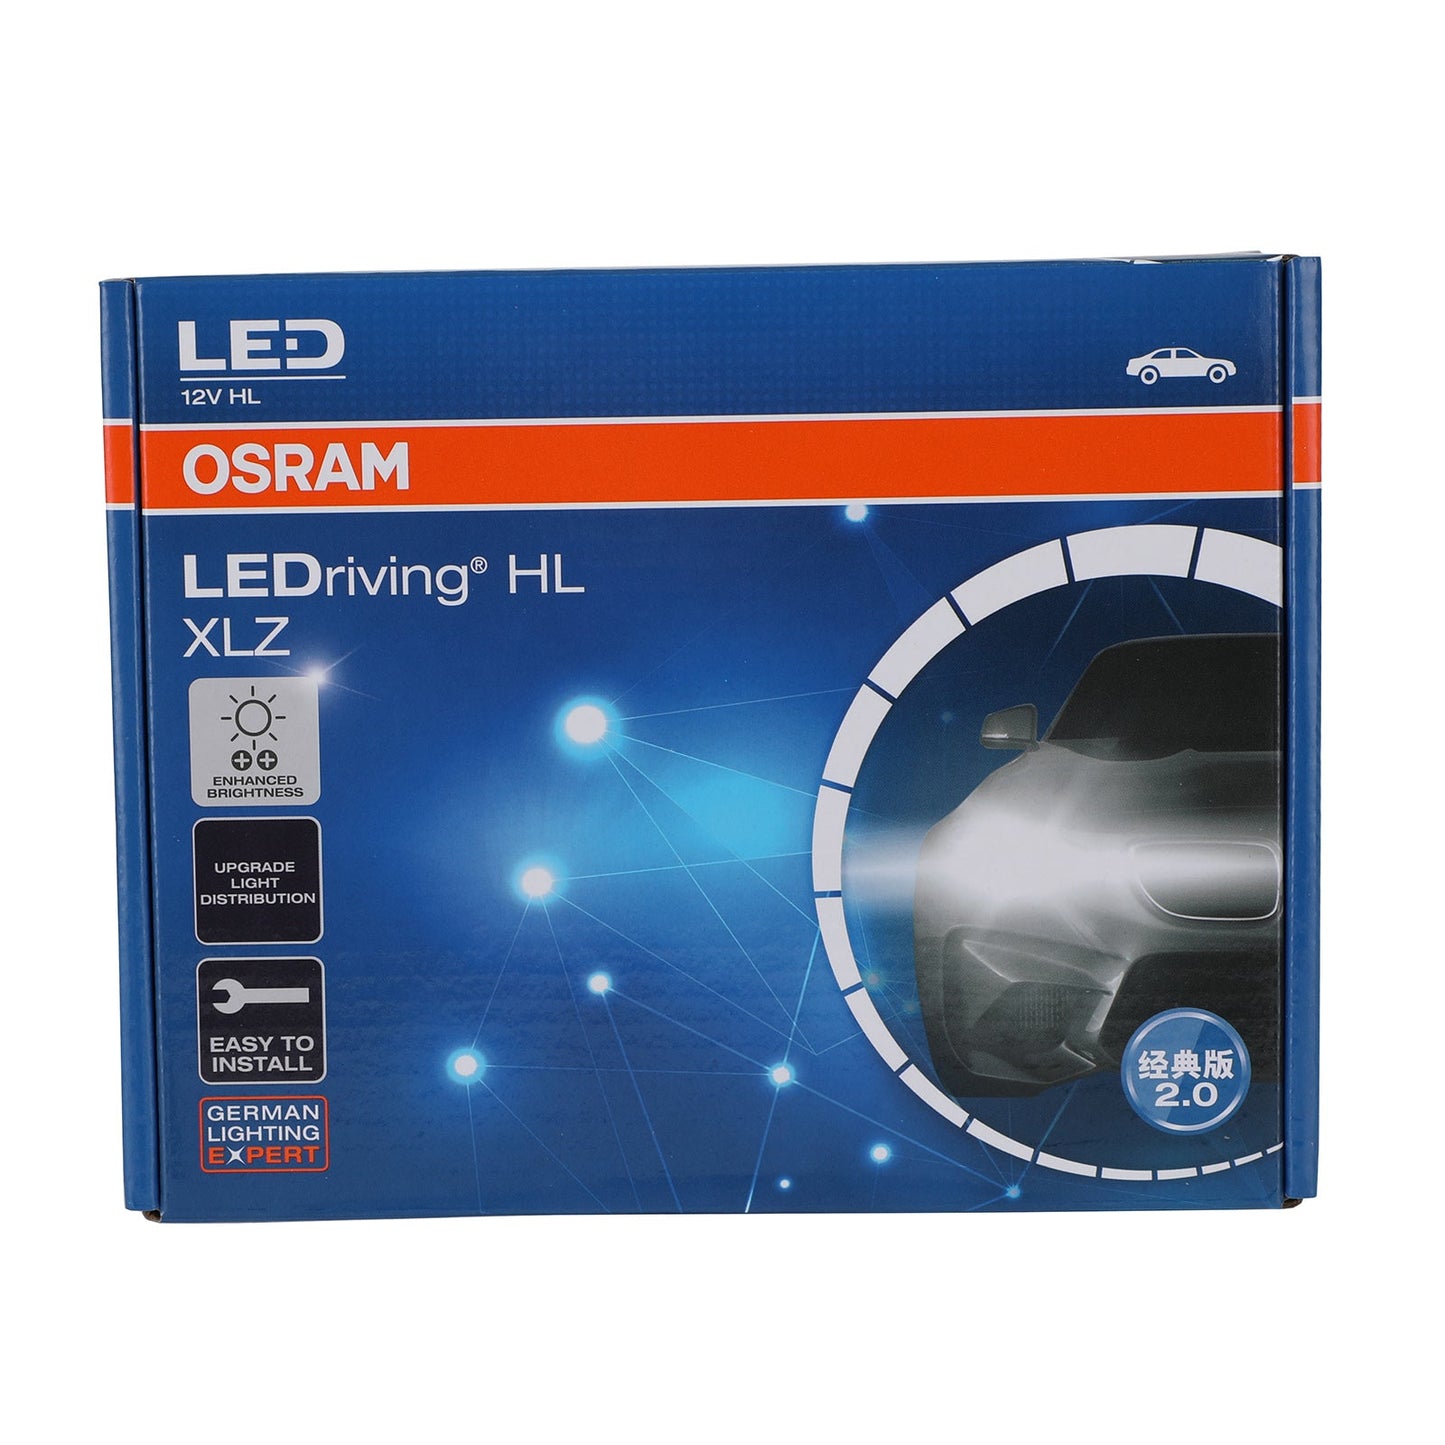 F6211CW H8 For OSRAM Car LEDriving HL XLZ Enhanced Brightness 12V27W PGJ19-x